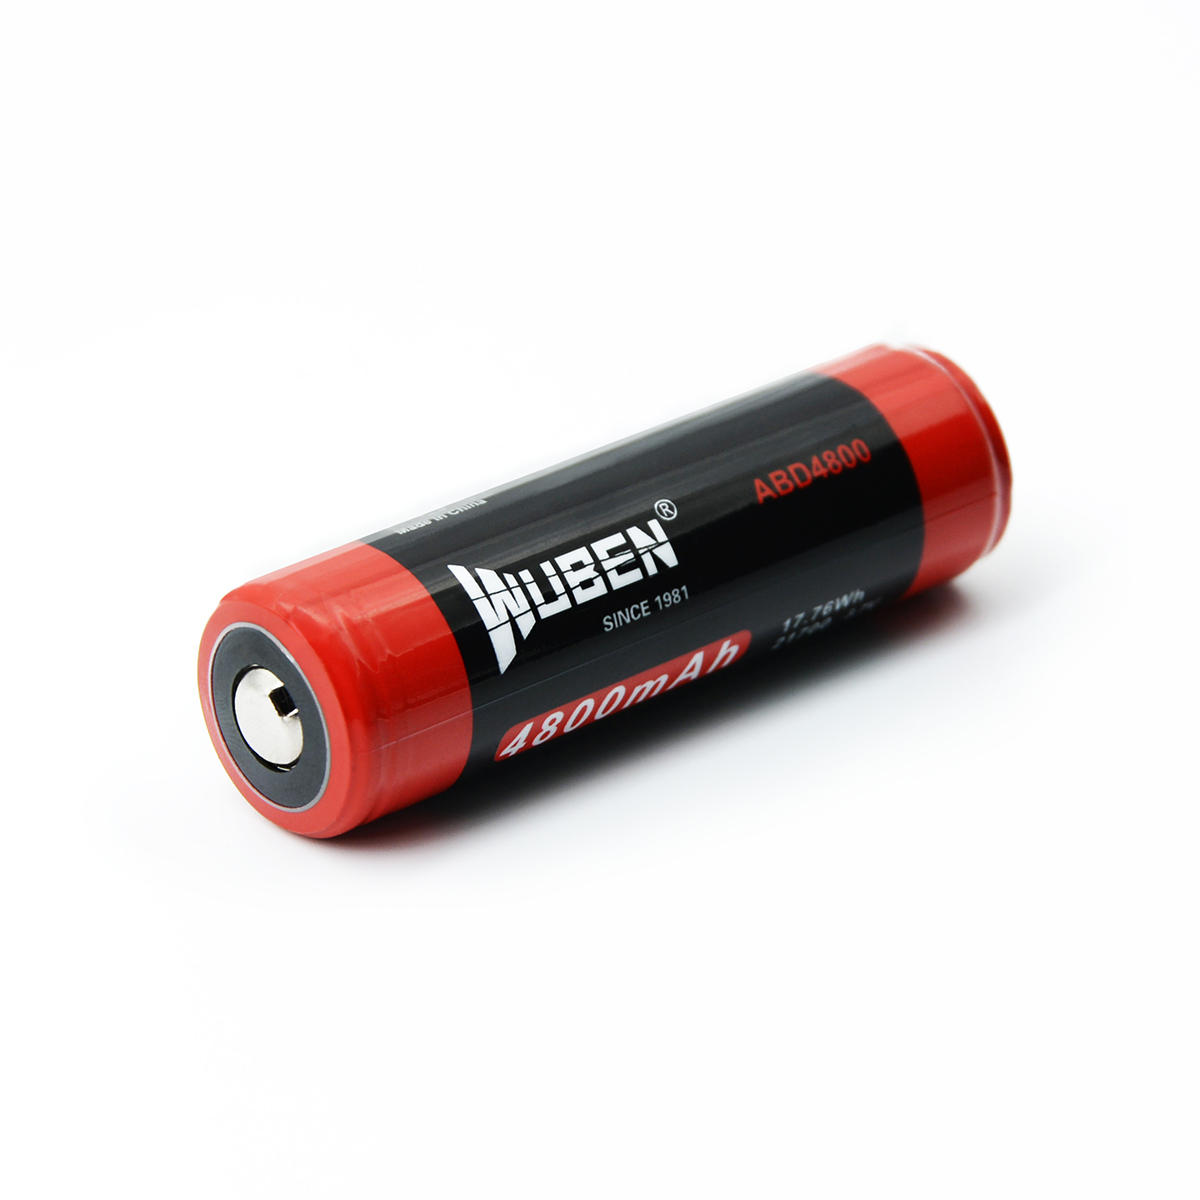 Wuben 4800mAh 3.7V 20A 21700 Fast Charging Battery for Flashlight Tools